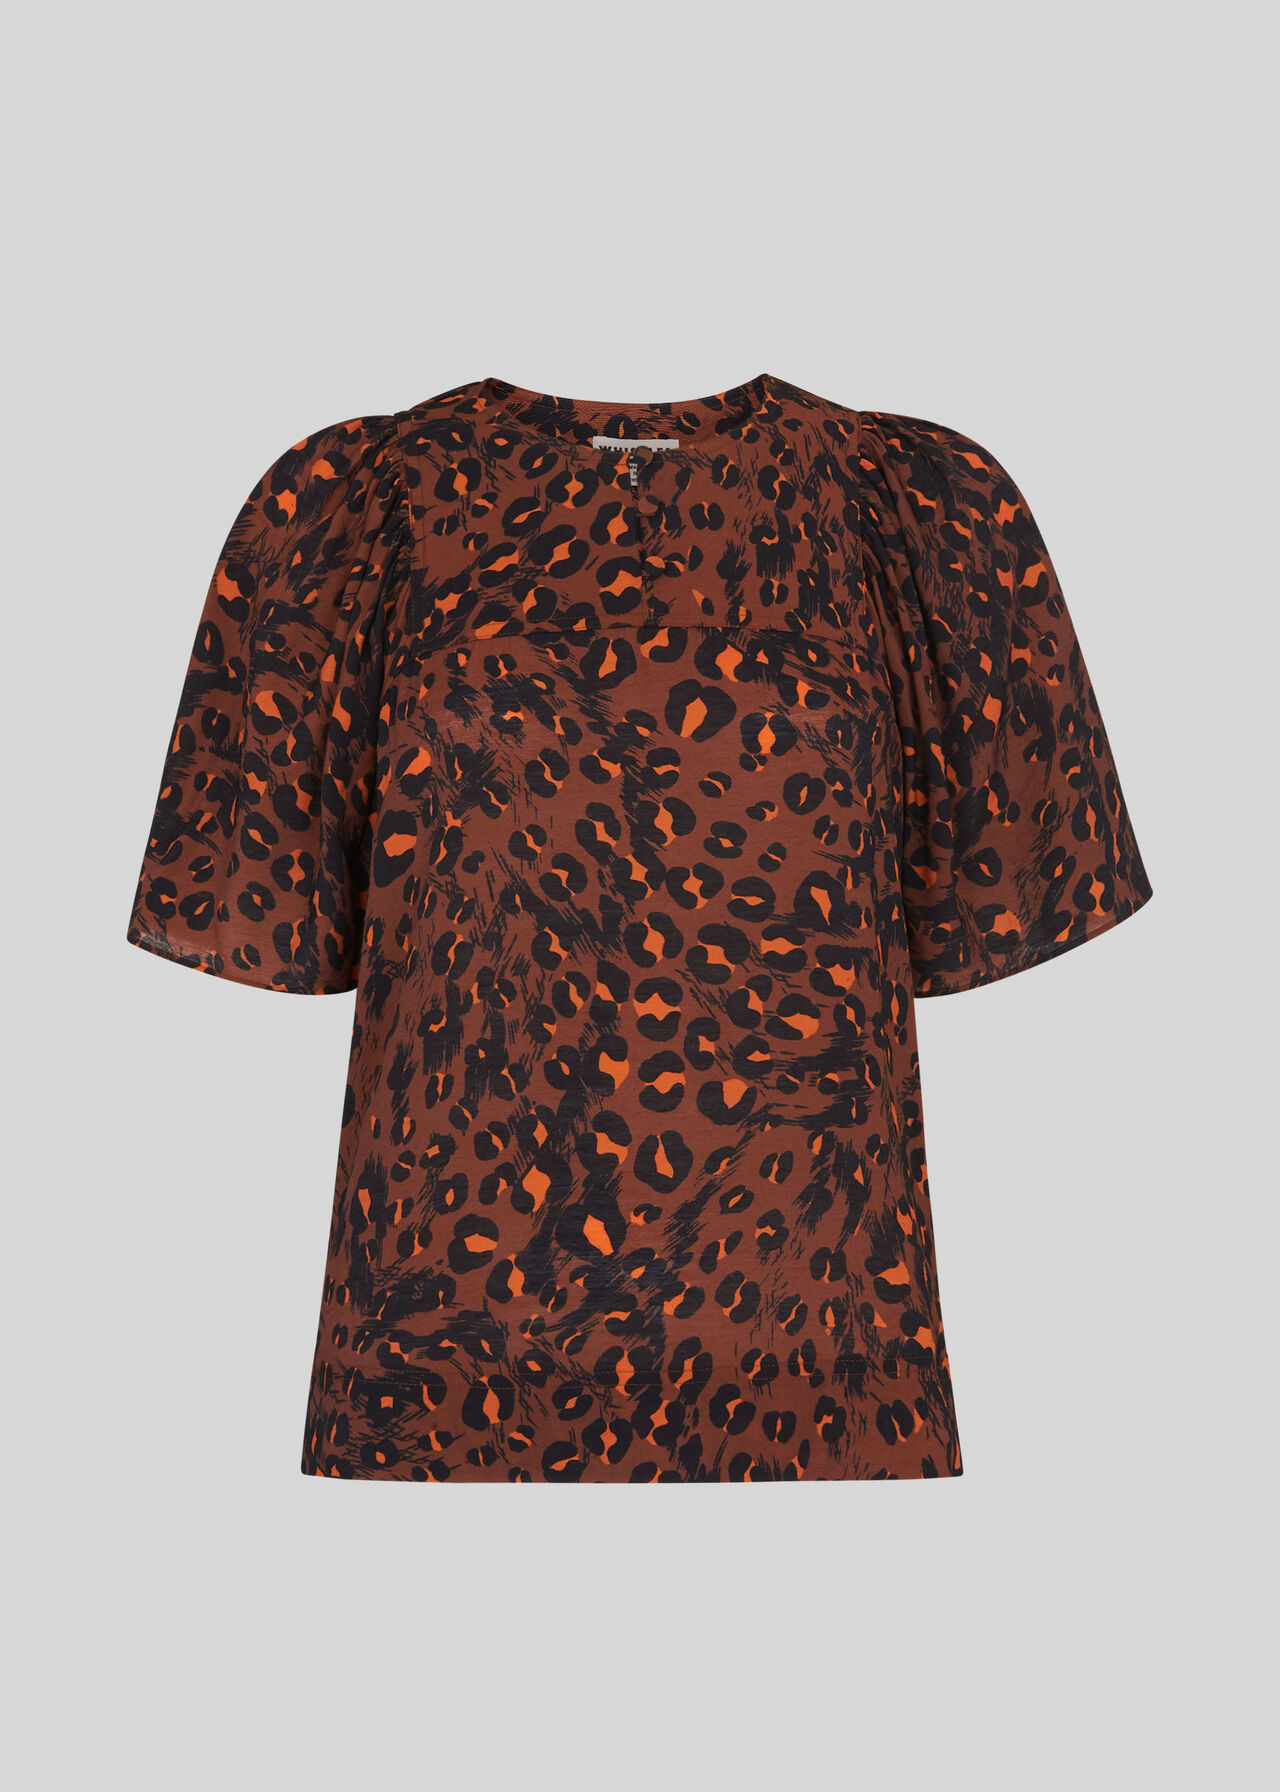 Brushed Leopard Print Top Brown/Multi